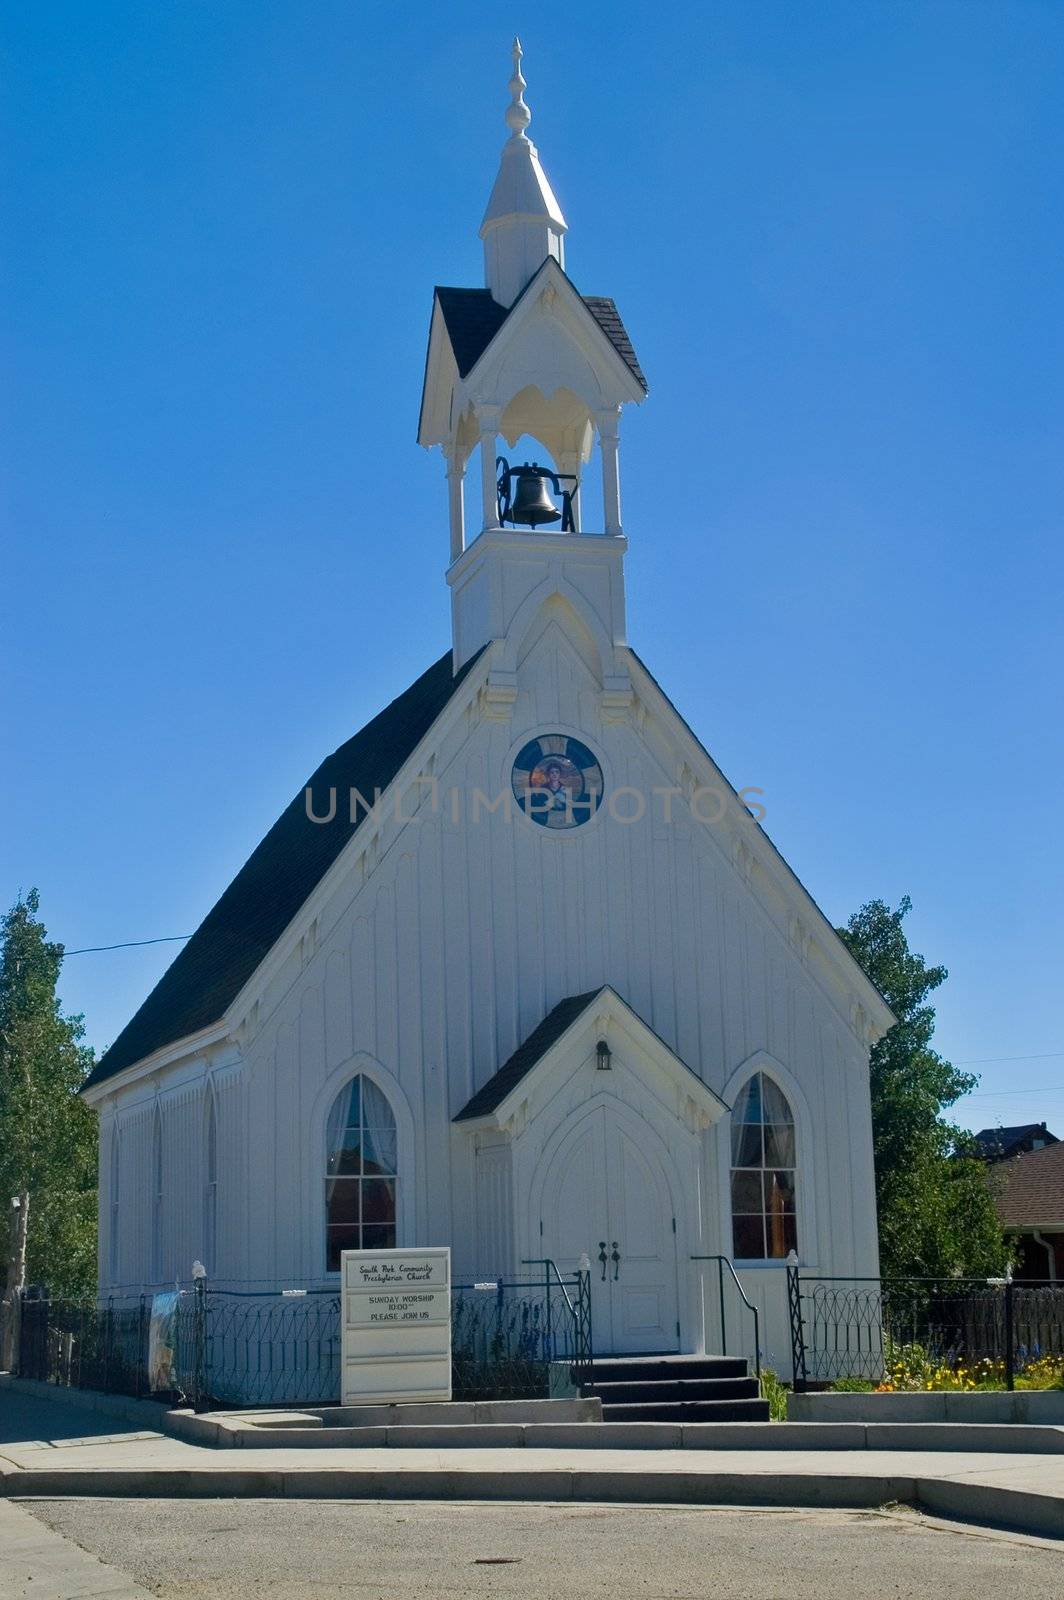 Rural American Country Church by jdebordphoto